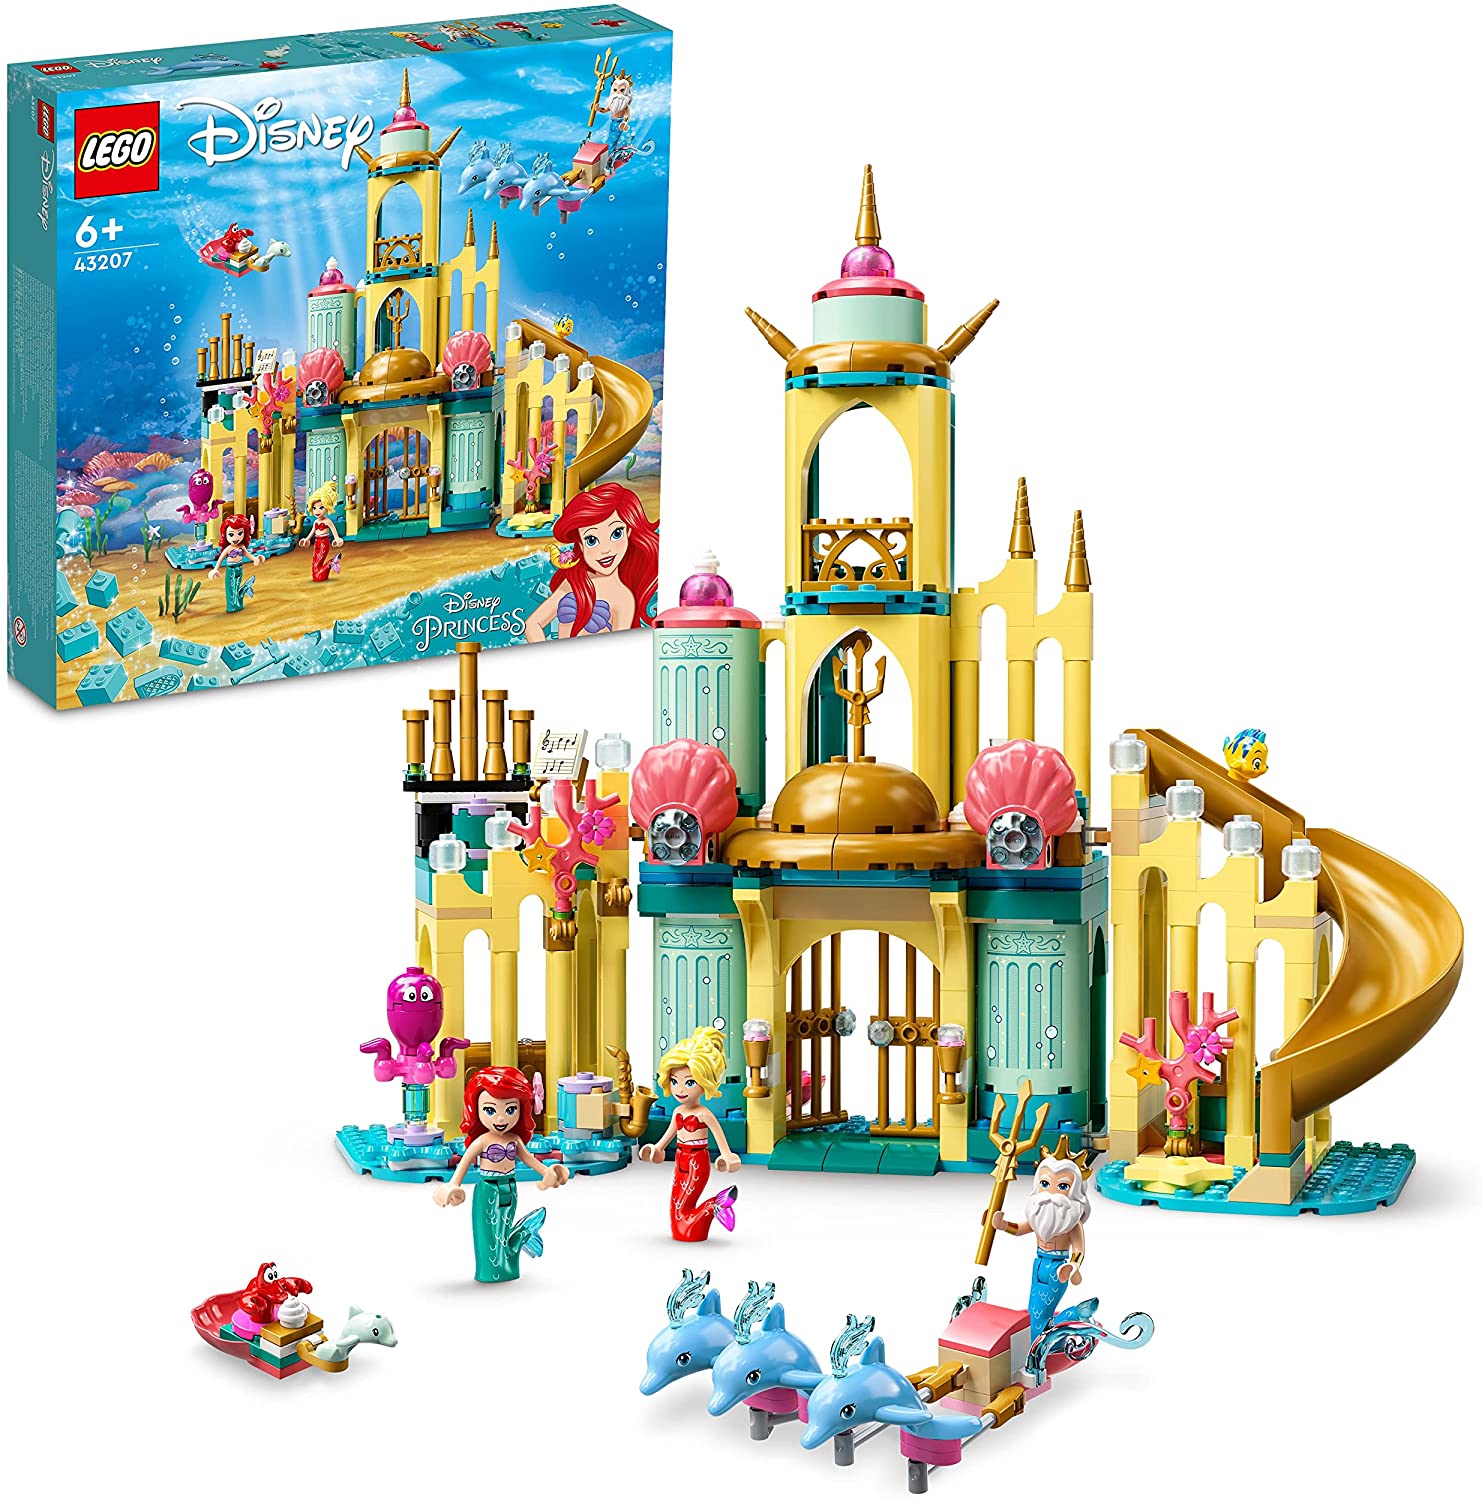 LEGO 43207 Disney Ariel Underwater Castle with Mini Doll by Ariel the Littl